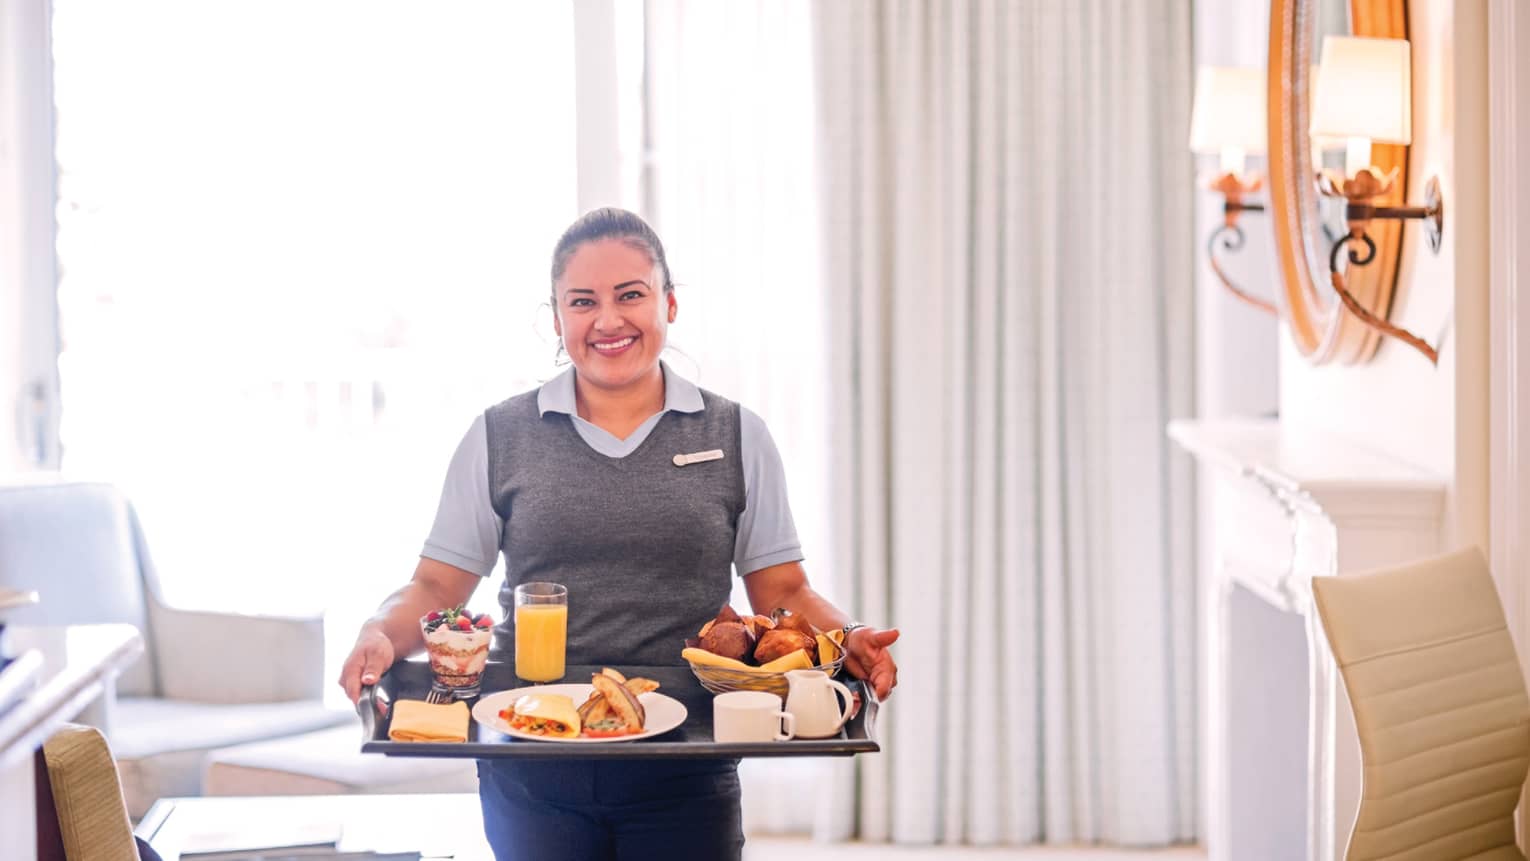 Smiling server carries in-room breakfast tray in elegant white hotel room